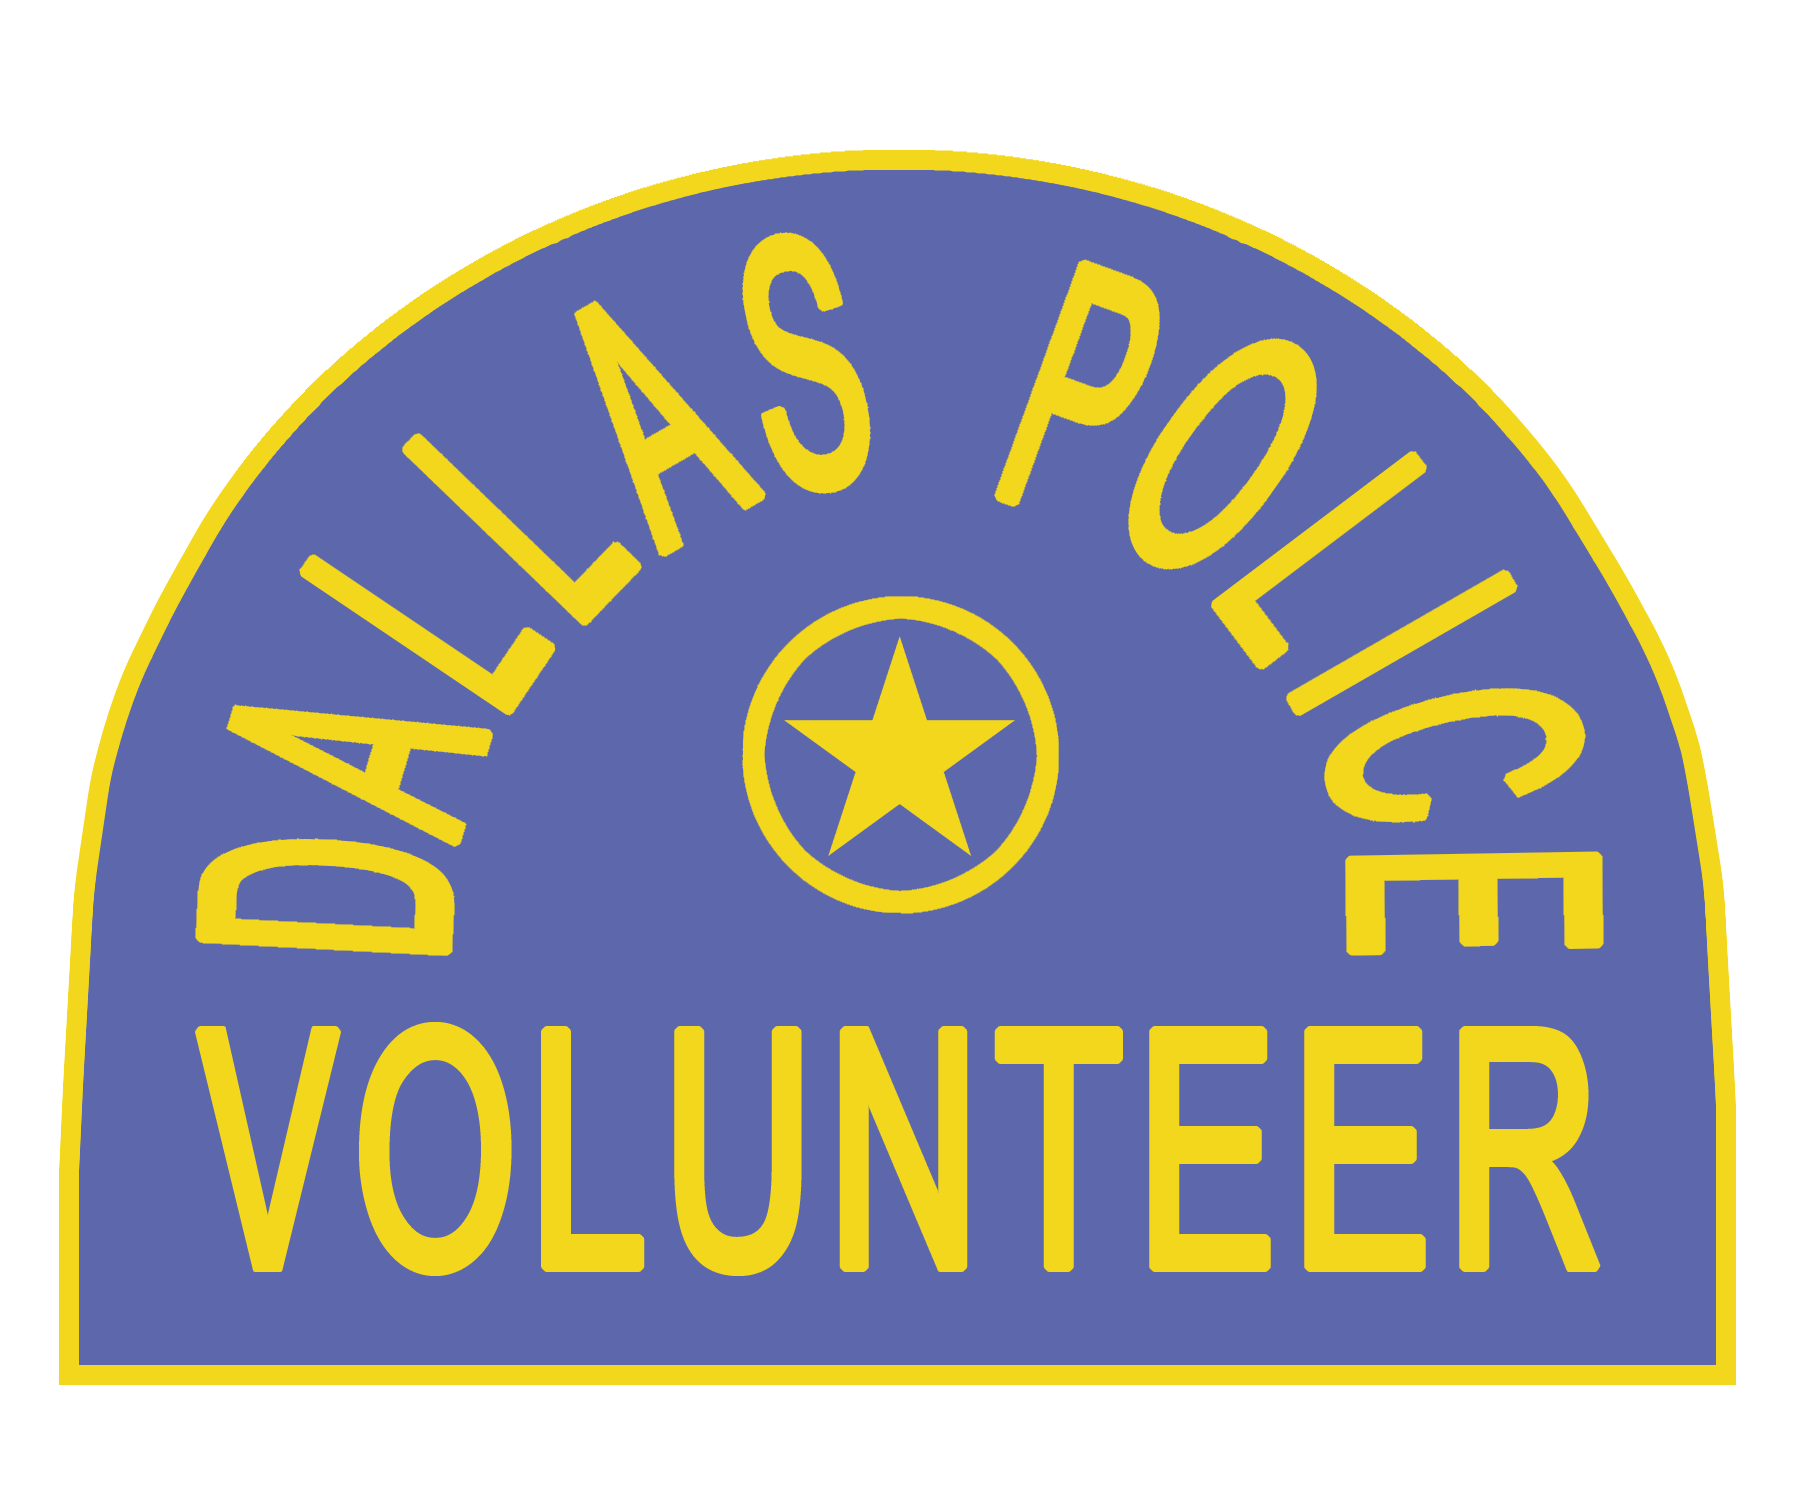 Dallas Police Organizational Chart